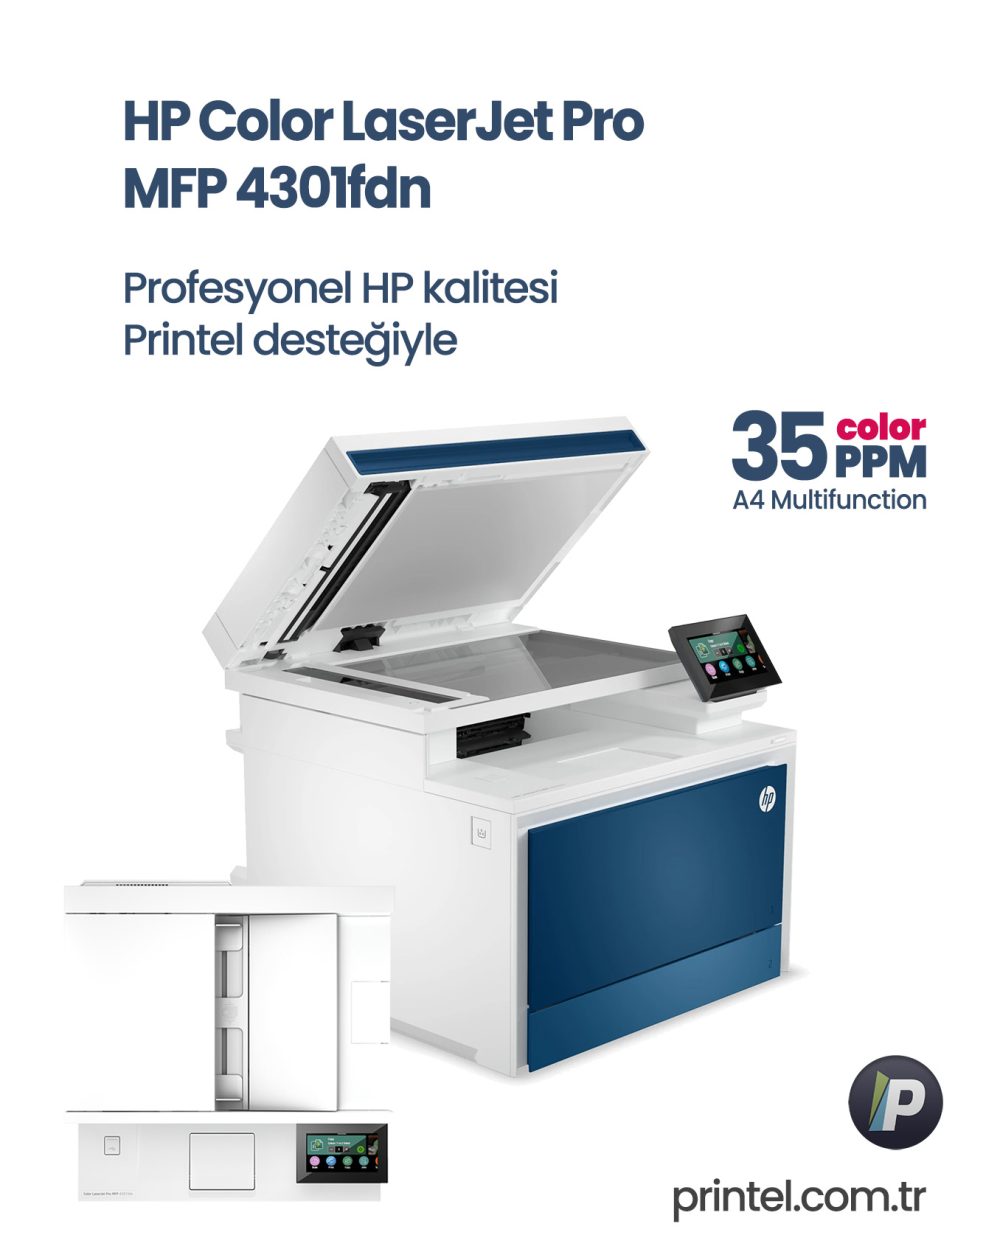 HP Renkli LaserJet Pro MFP 4301fdn Yazıcı 8